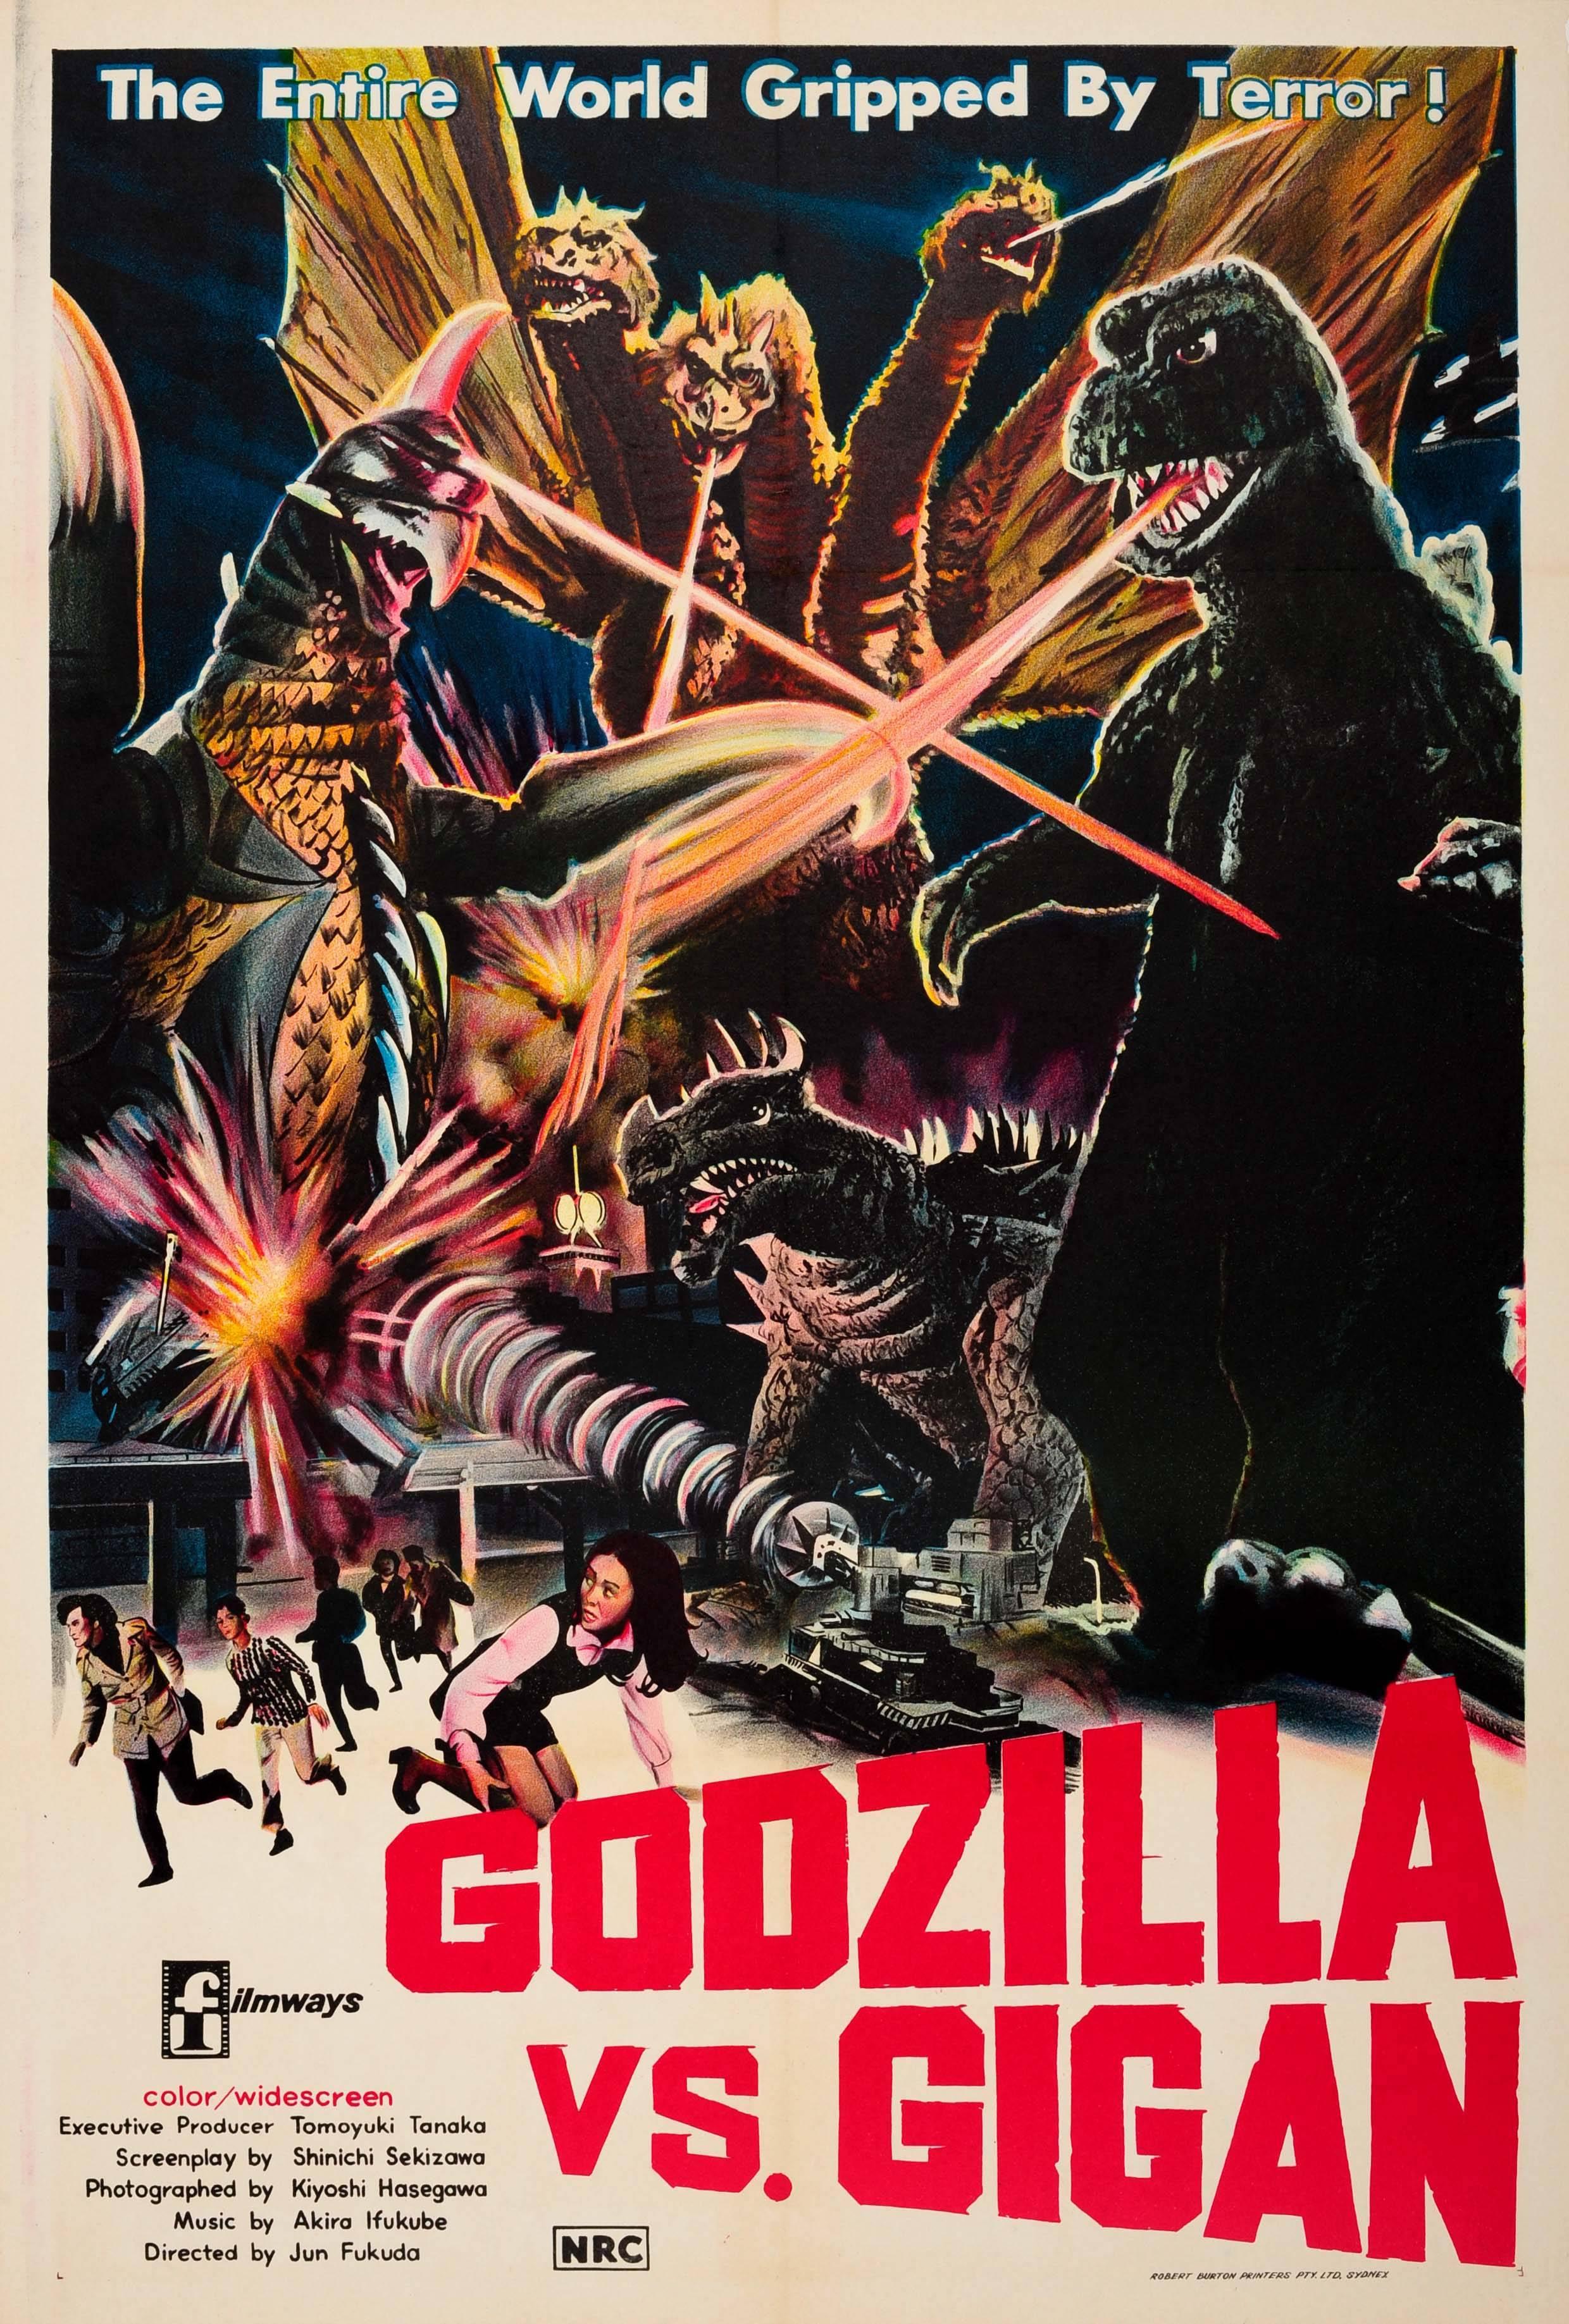 Unknown Print - Original Vintage Movie Poster For The Australian Release Of Godzilla Vs. Gigan